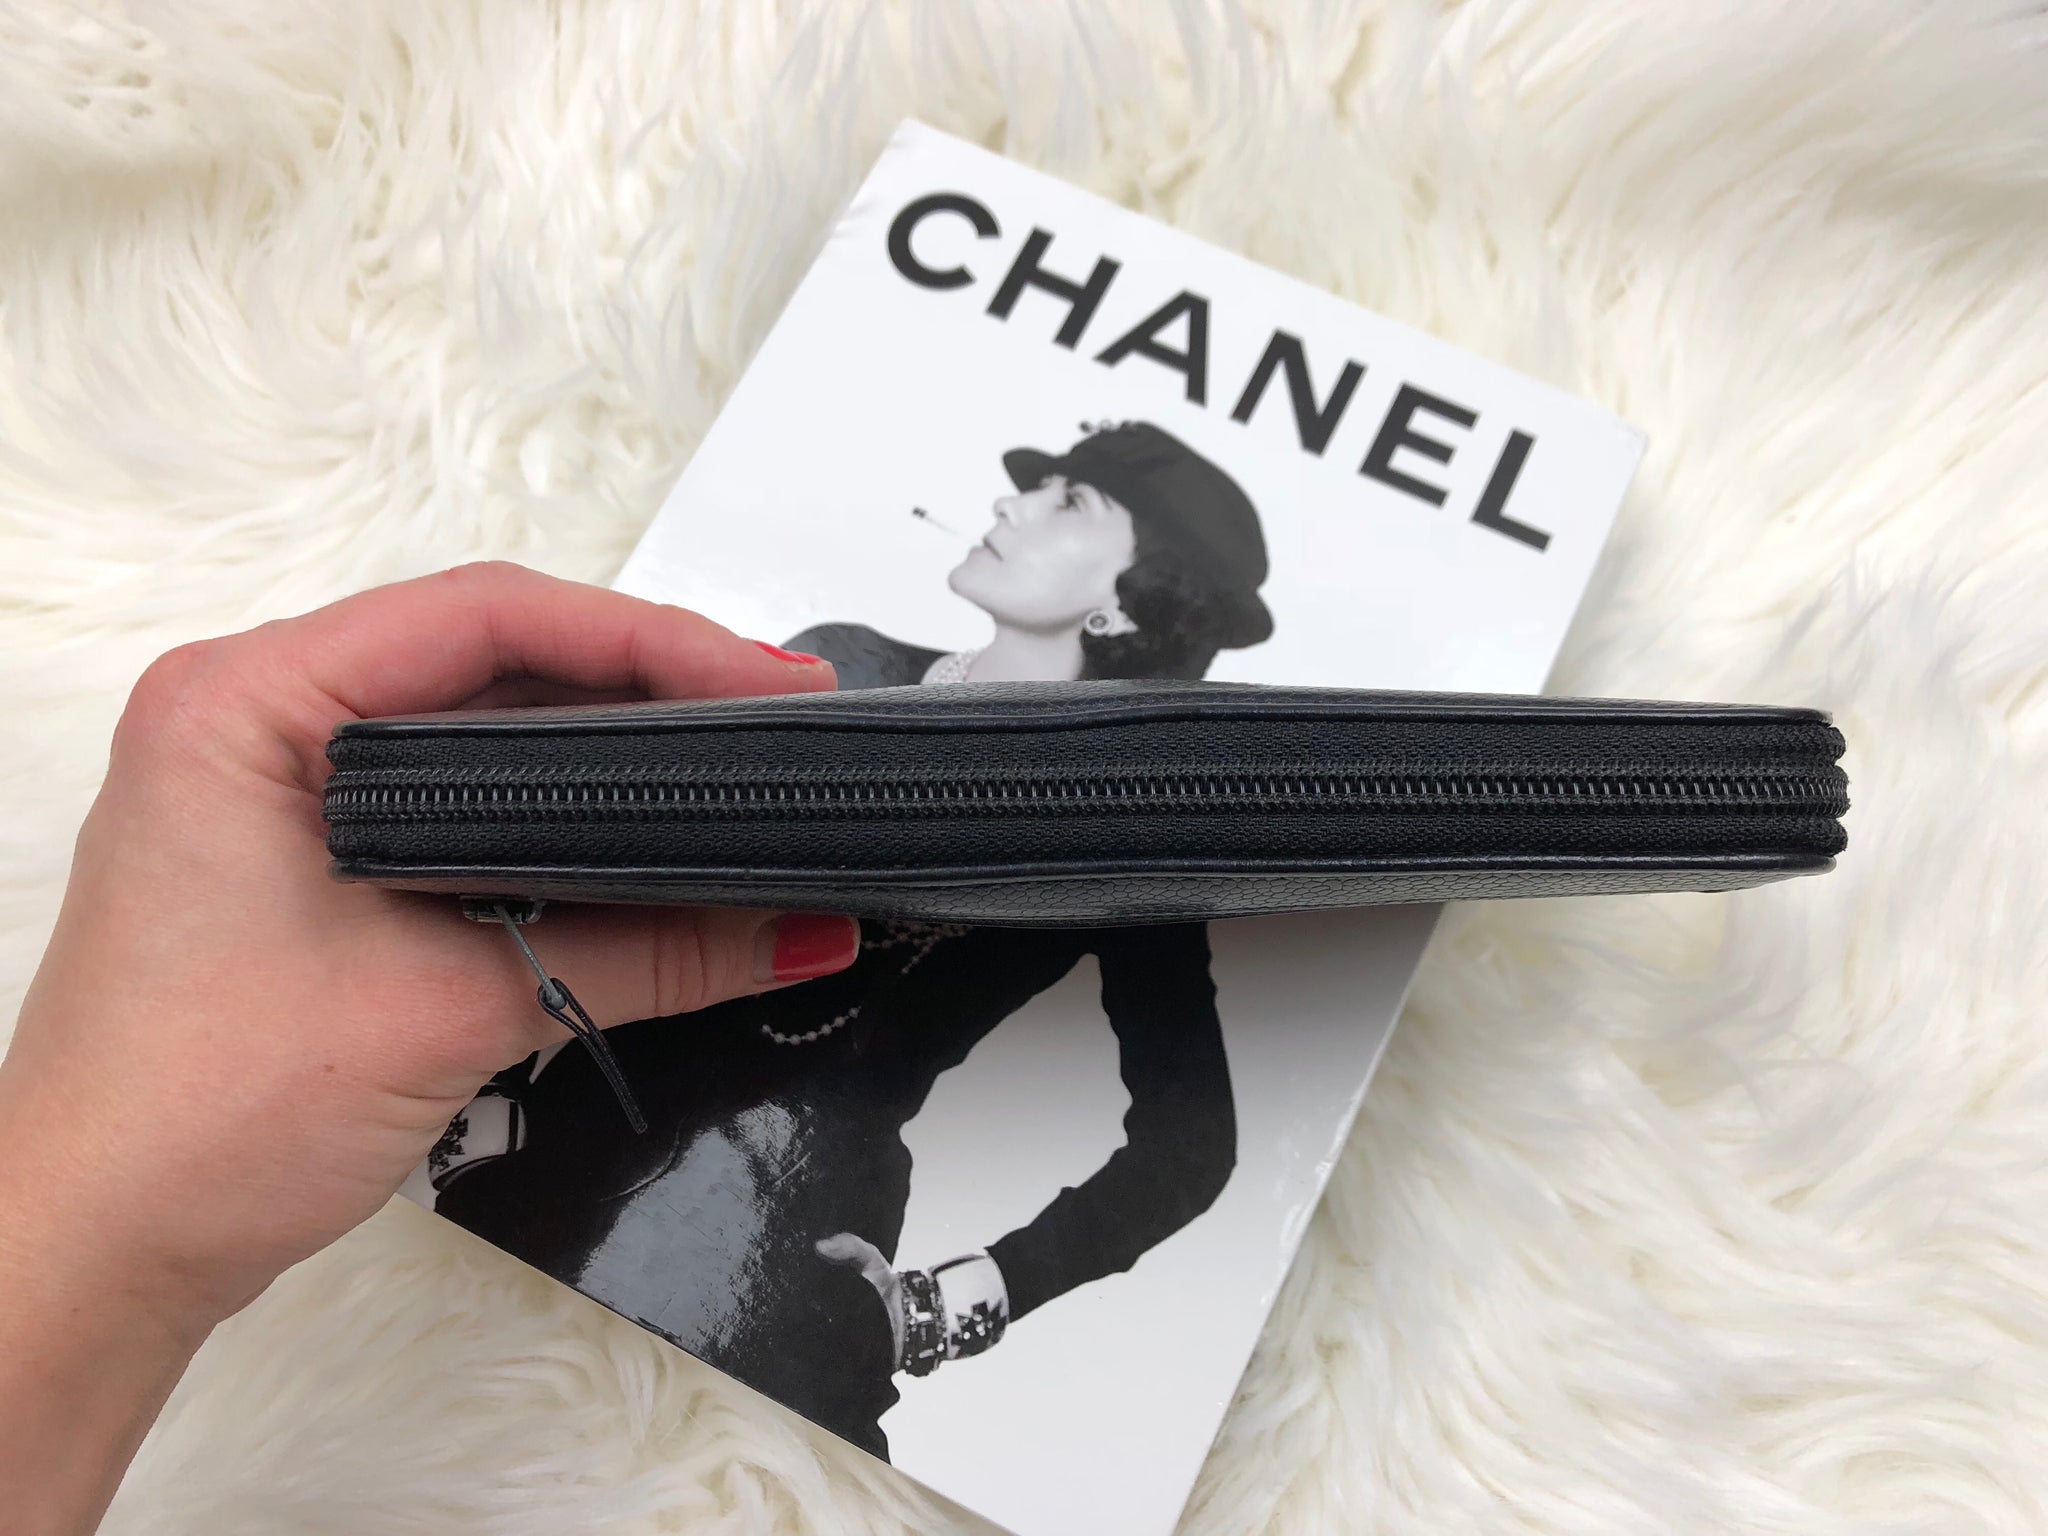 CHANEL Caviar Leather Black CC Zippy Wallet